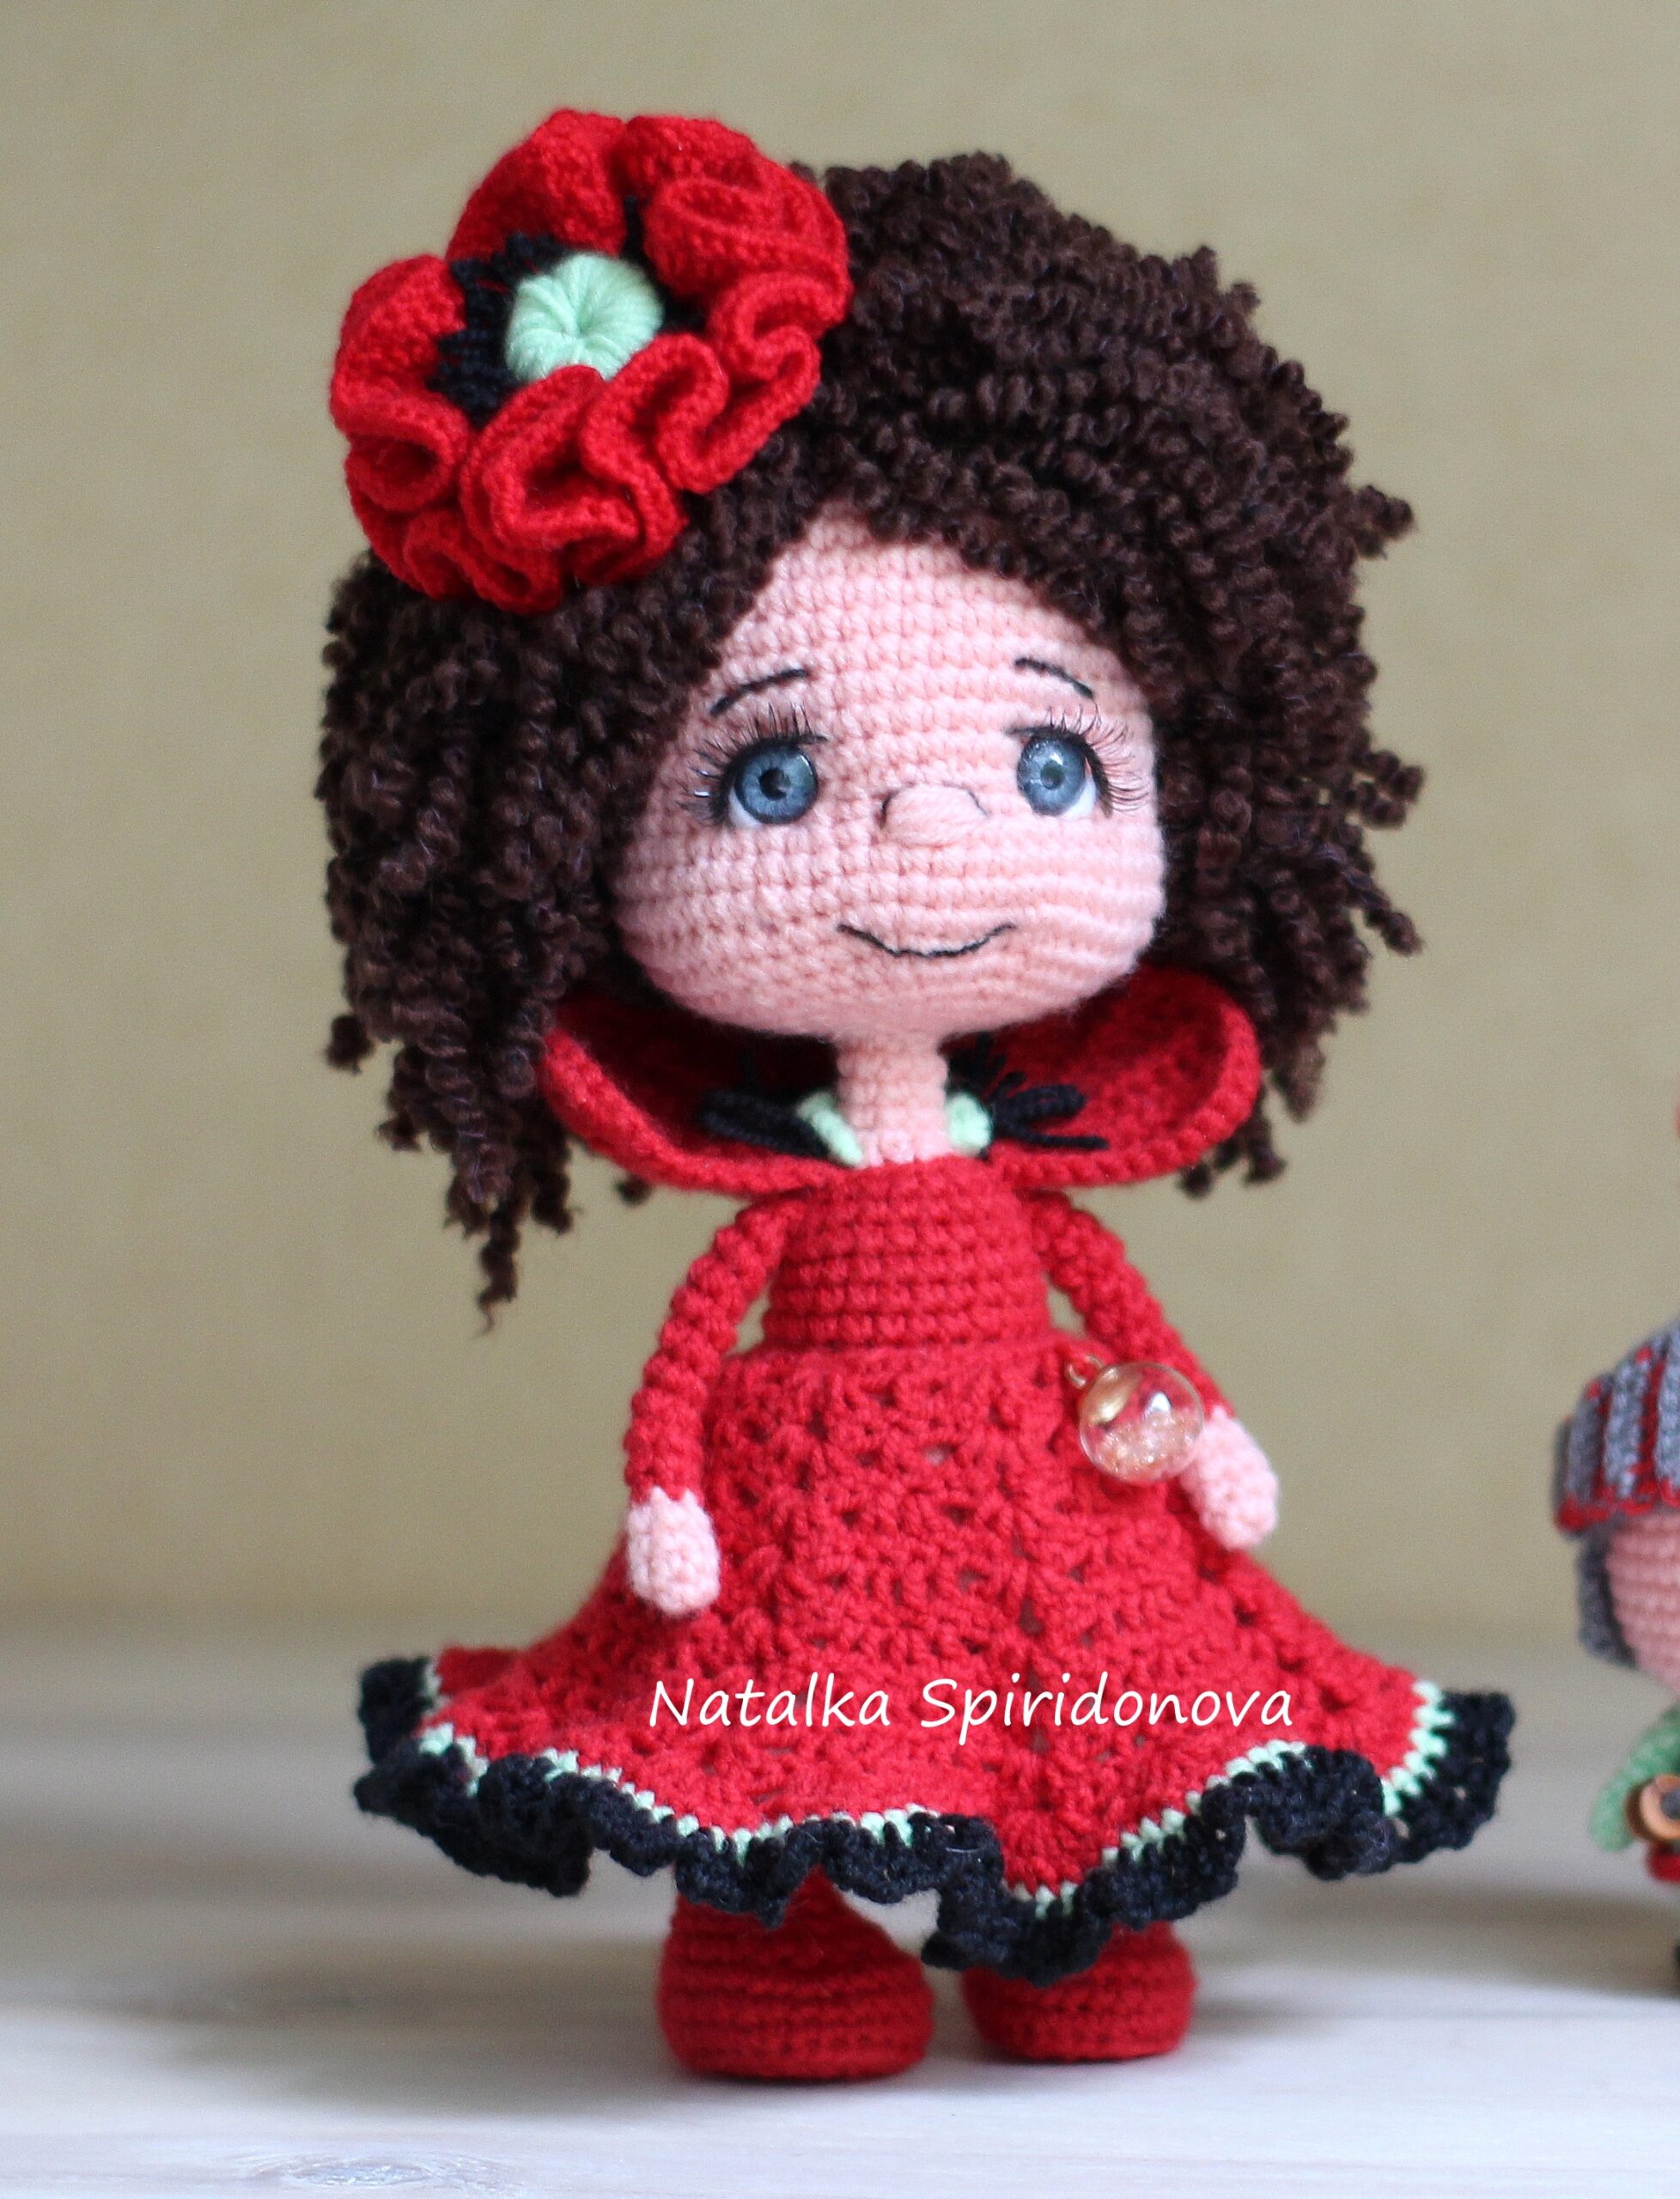 Amigurumi Lovely Dolls: Adorable Dolls Crochet Patterns (Paperback)